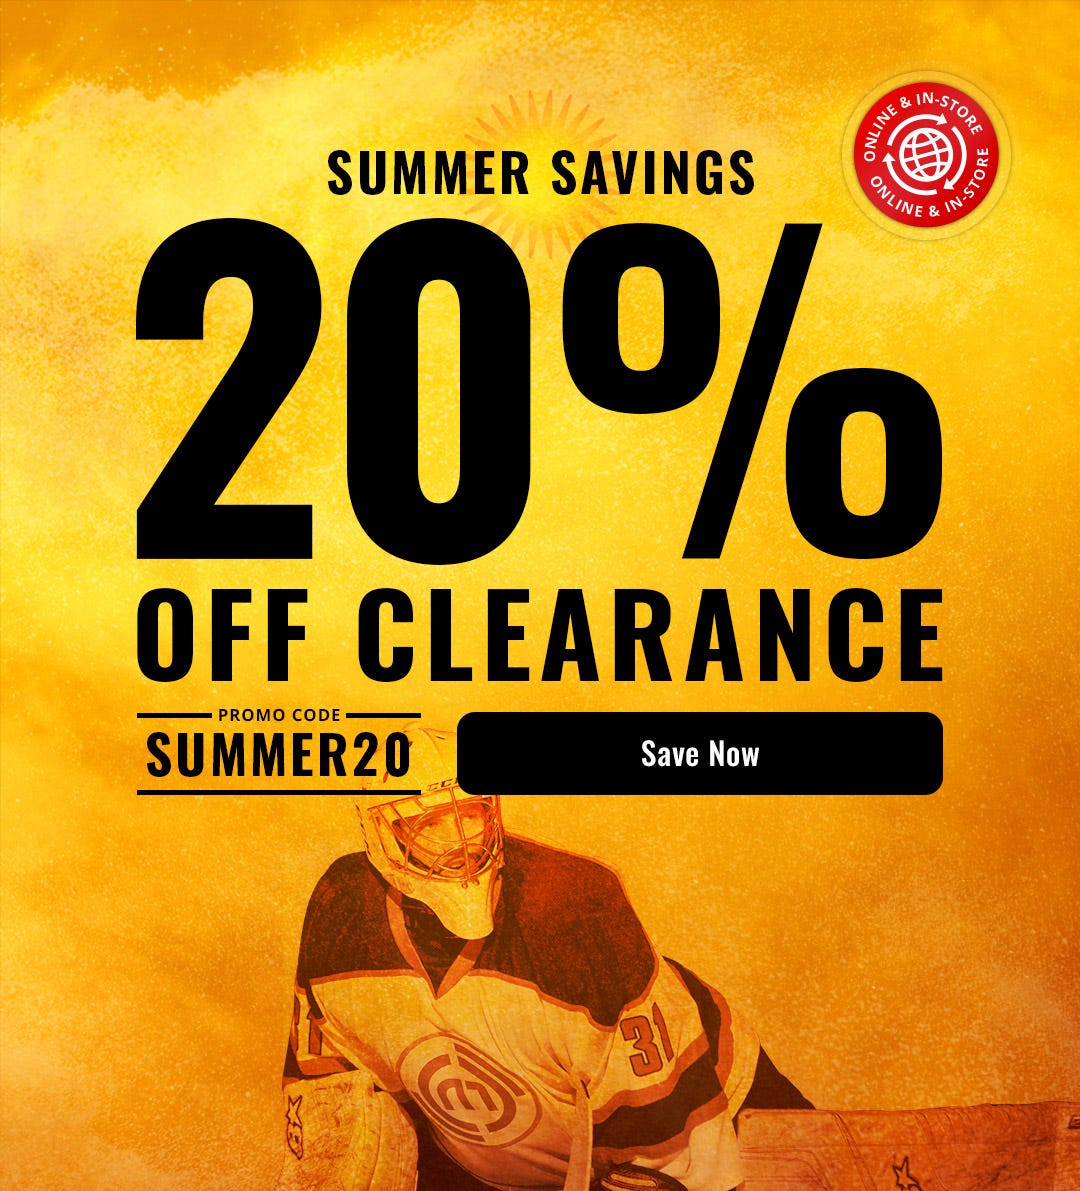 Summer Savings: 20% off clearance